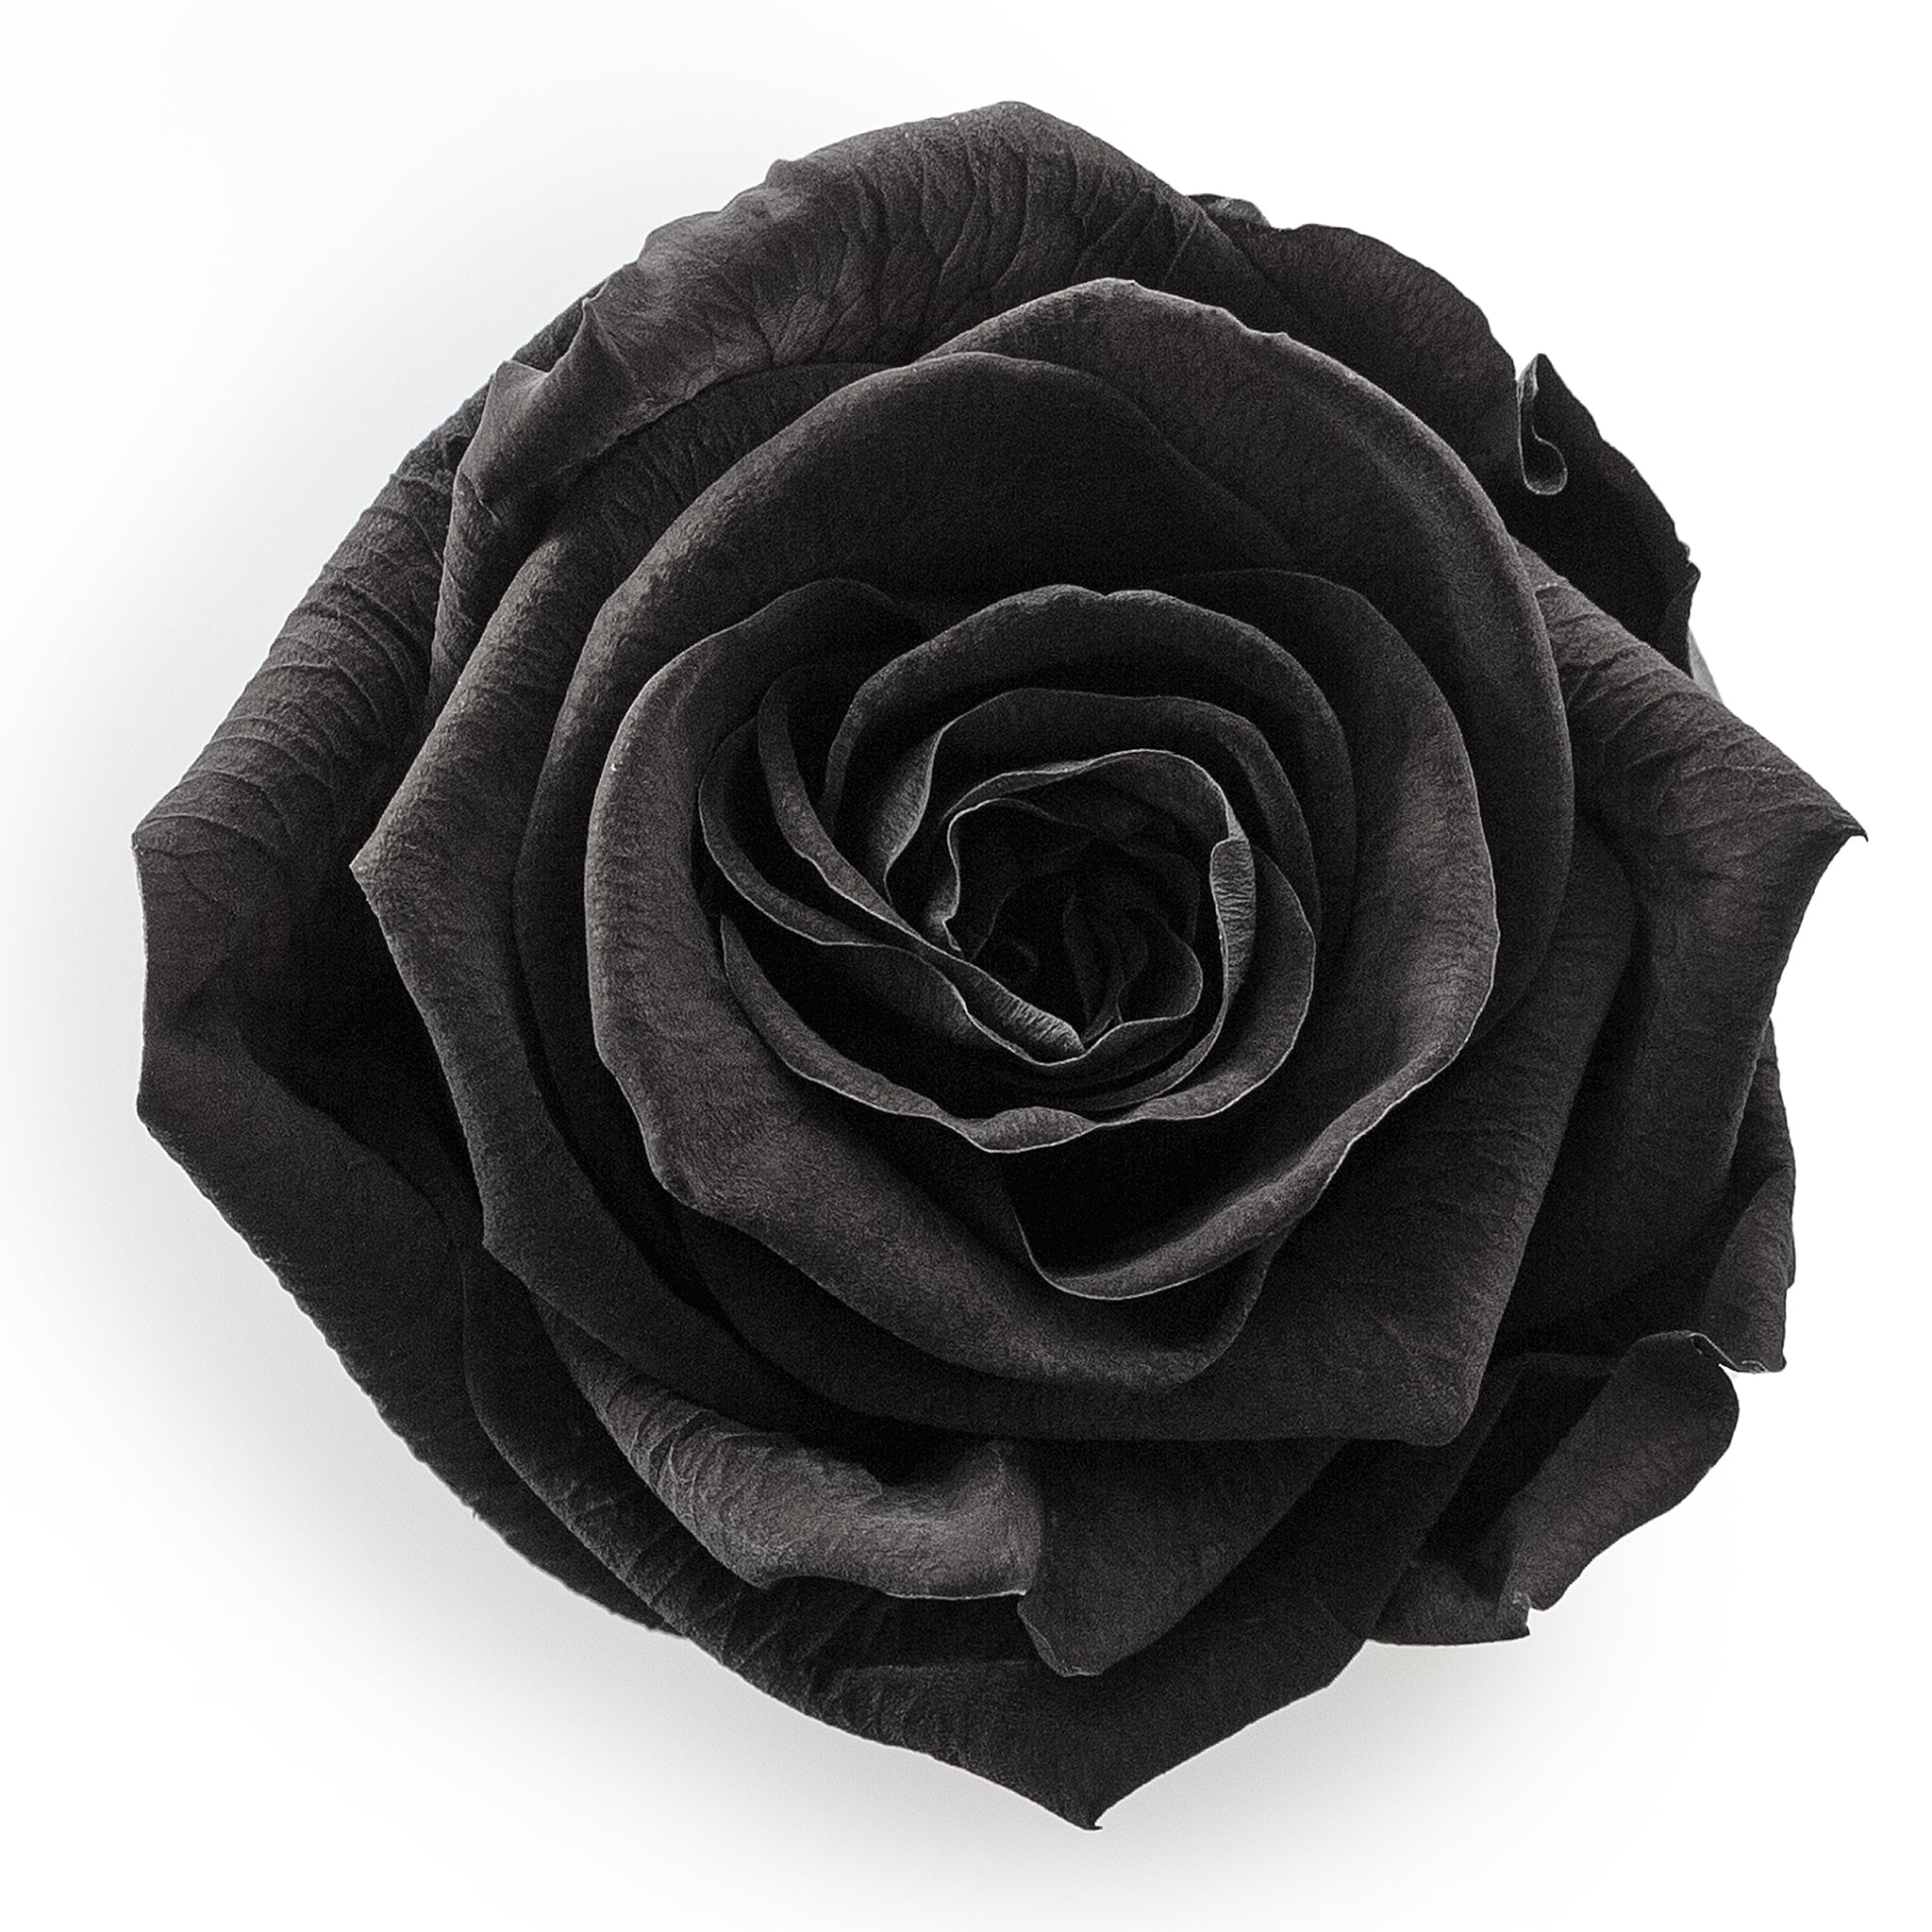 Forever Roses &amp; große herzförmige schwarze Box